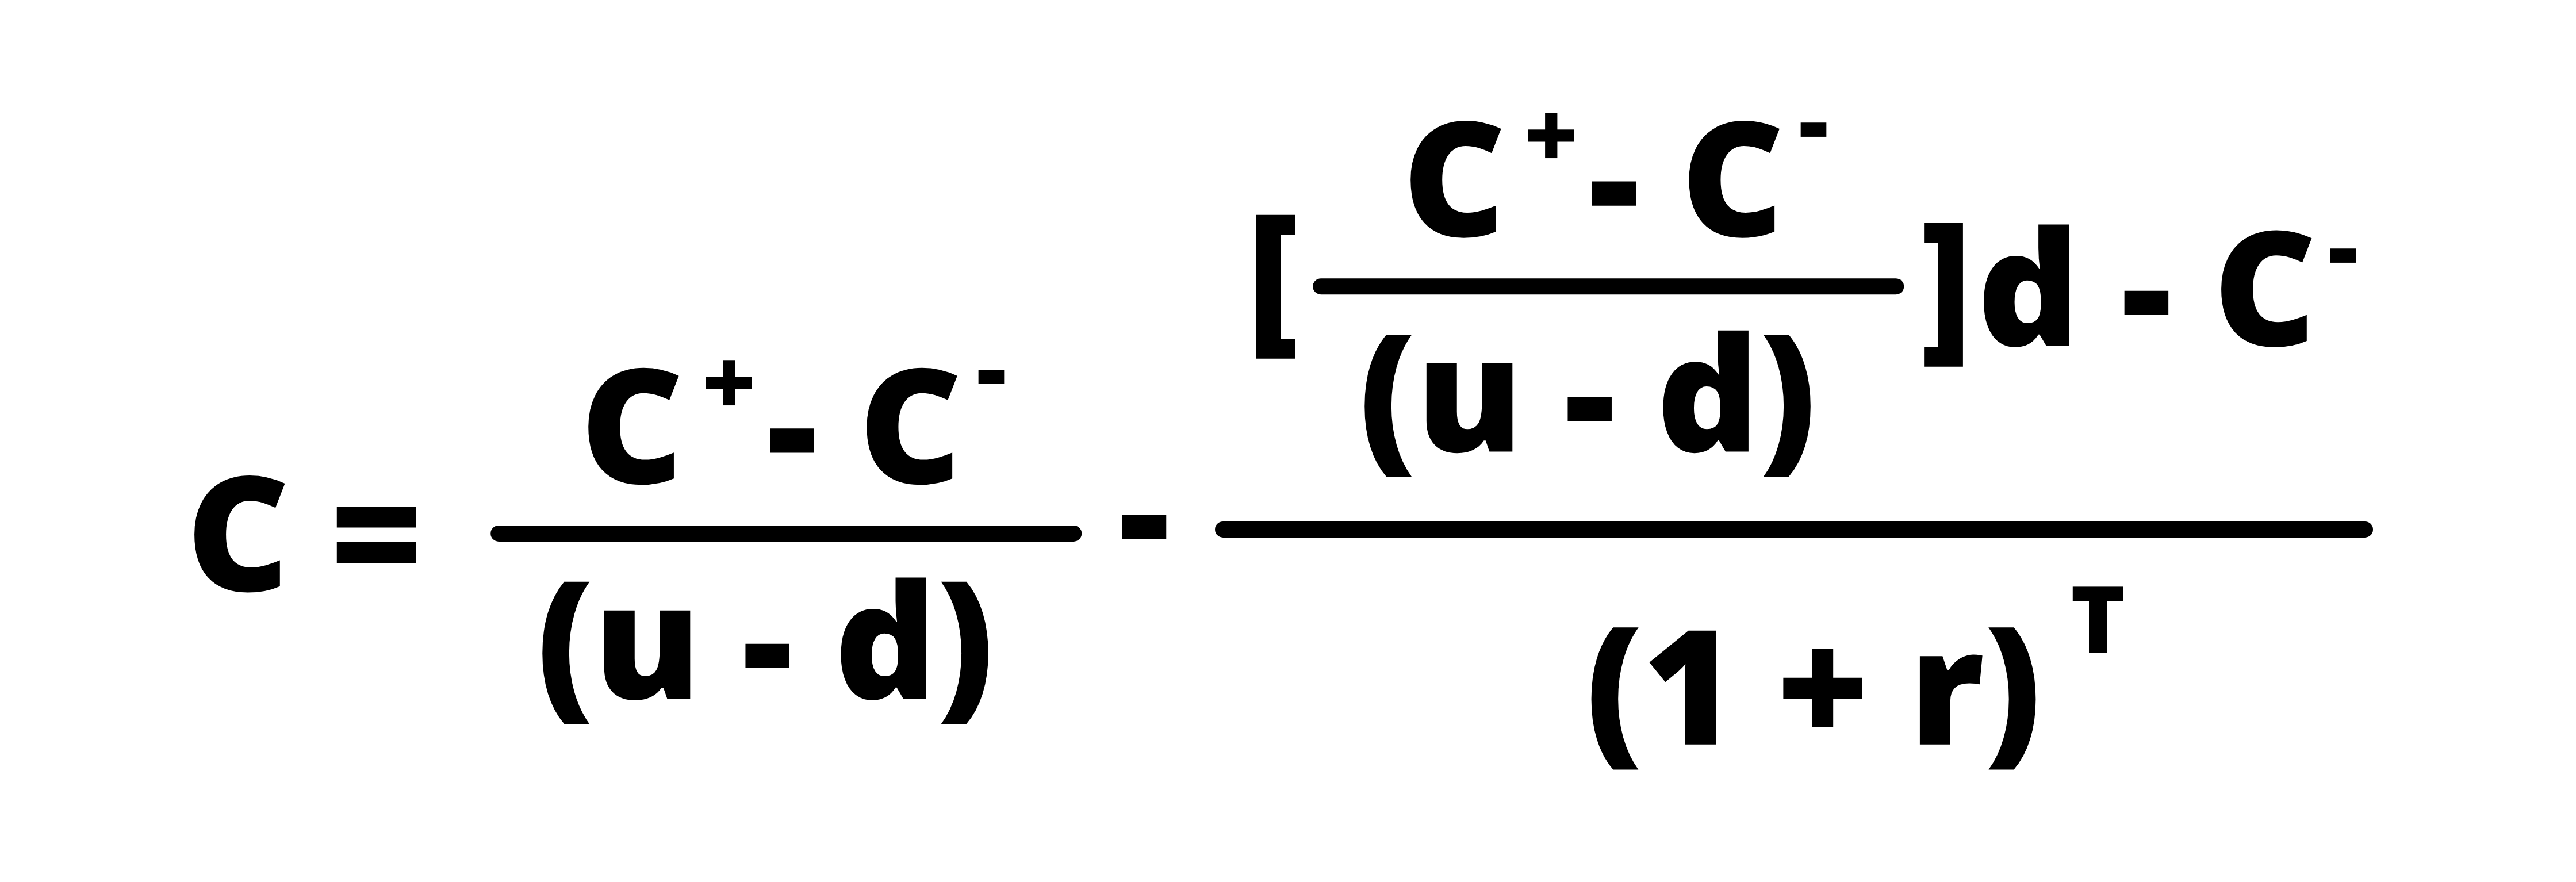 Binomial Model Formula Derivation Derivatives Pricing CFA Level 1 study notes 02